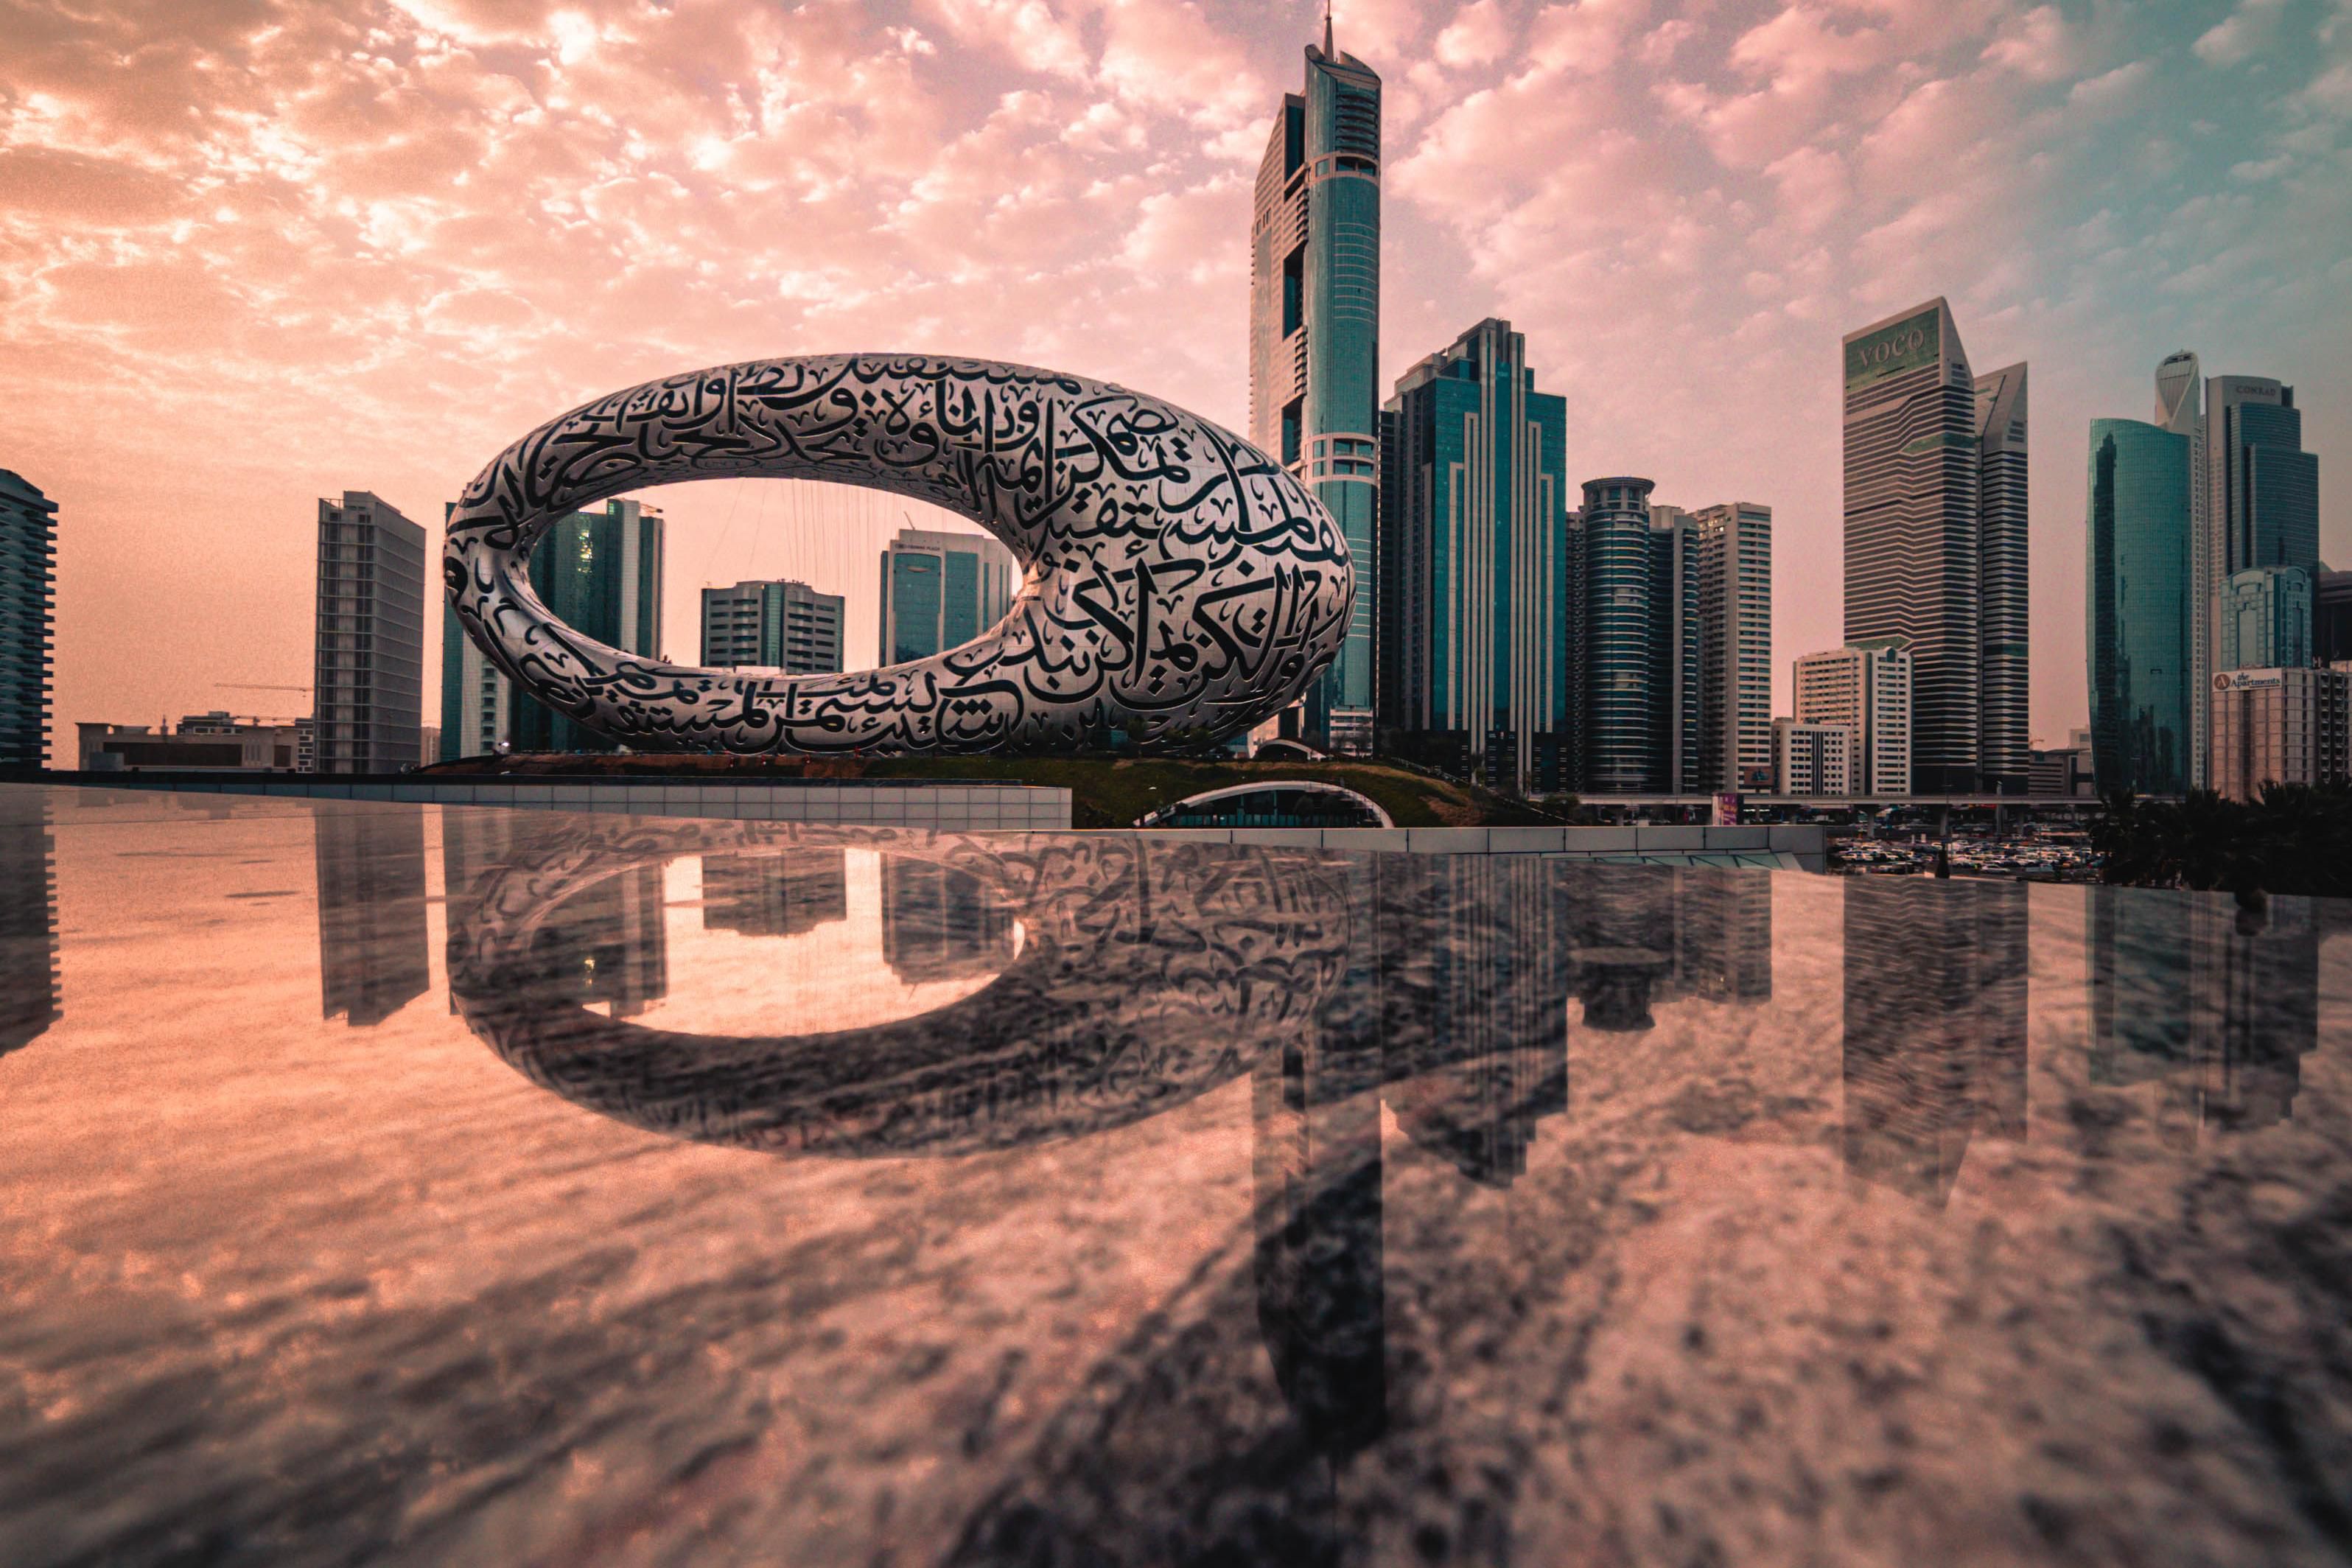 Dubai Museum of the Future View 1